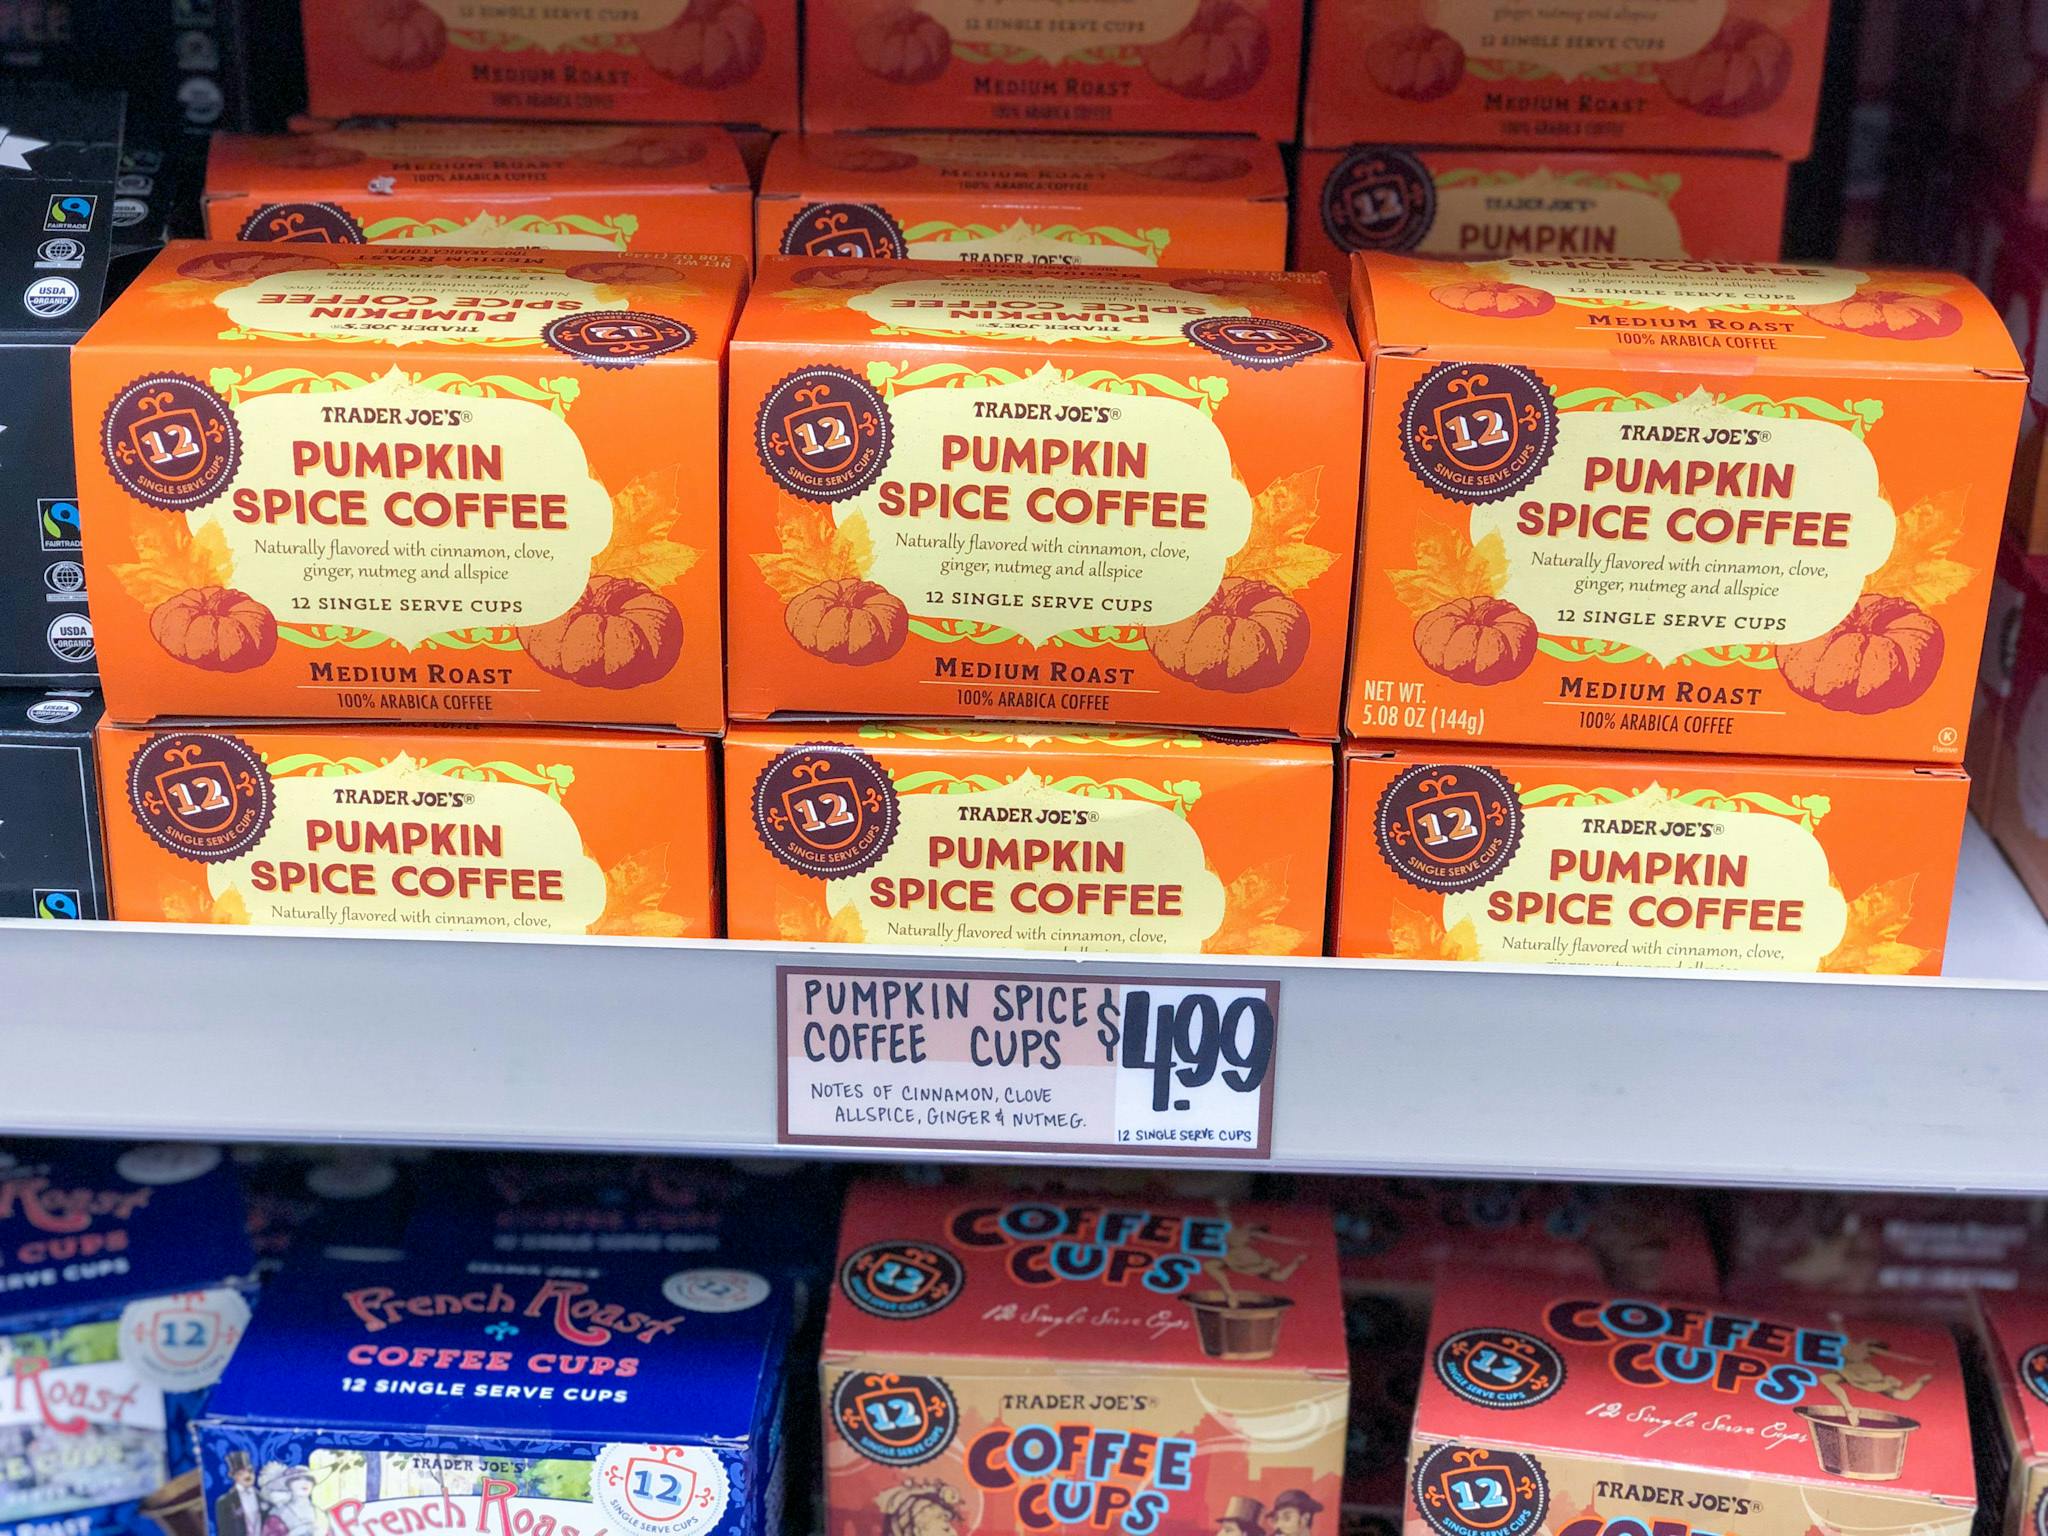 Trader Joe's pumpkin spice coffee cups on the shelf.